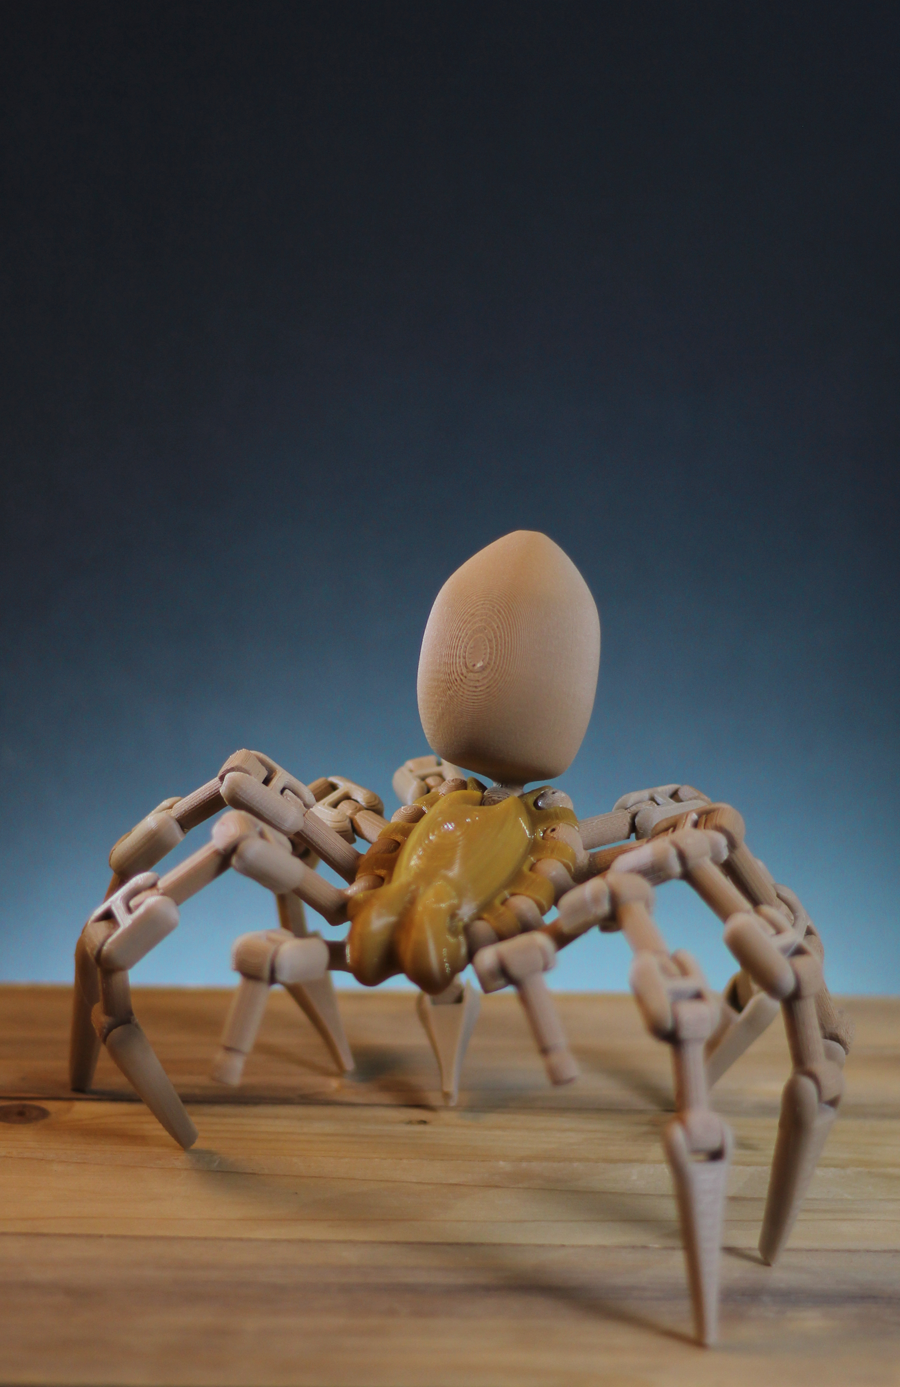 PREORDER Arachnid (1:1 scale Goliath spider)